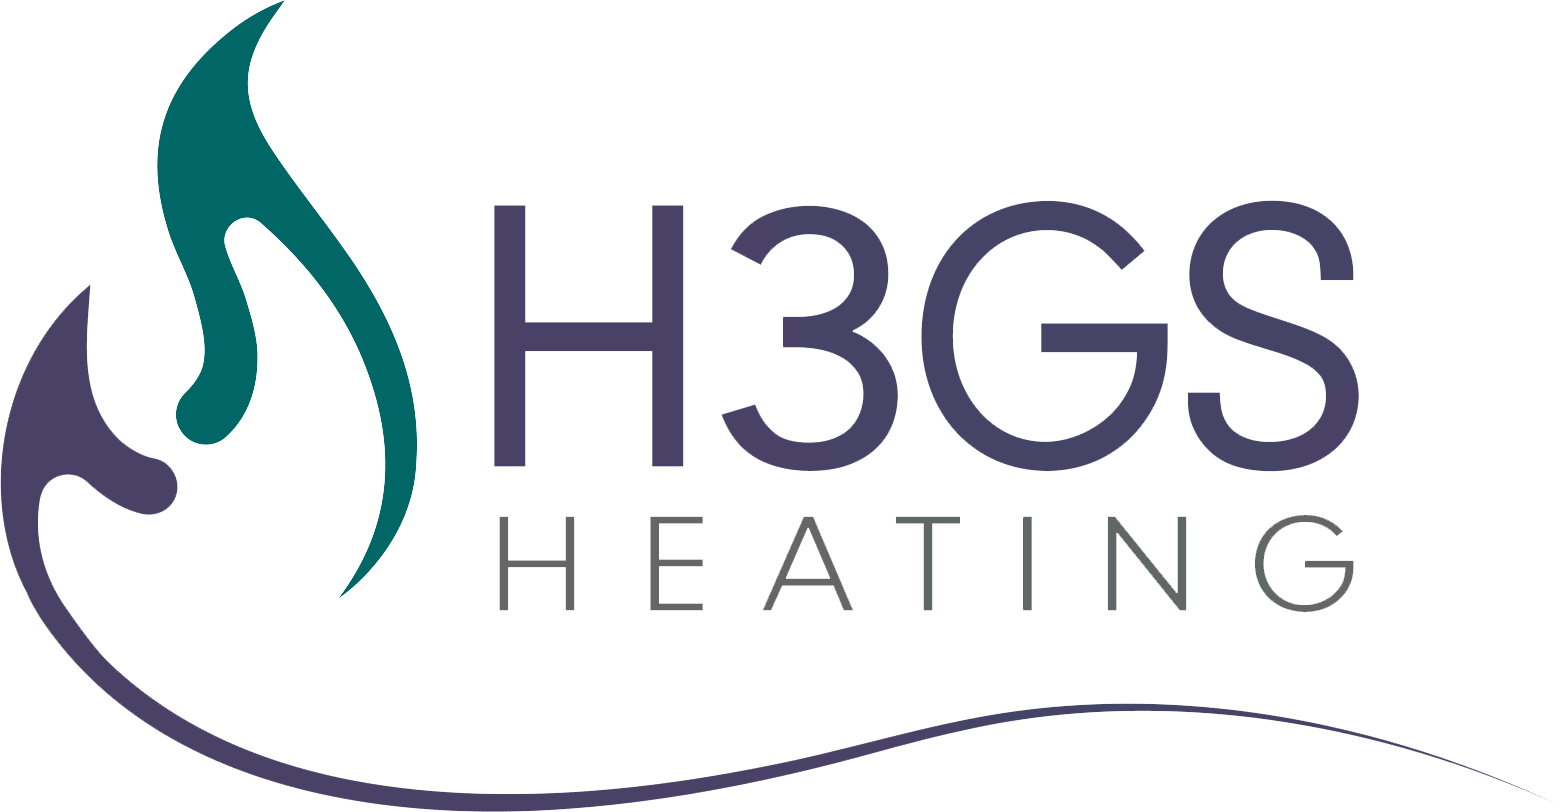 H3GS Heating